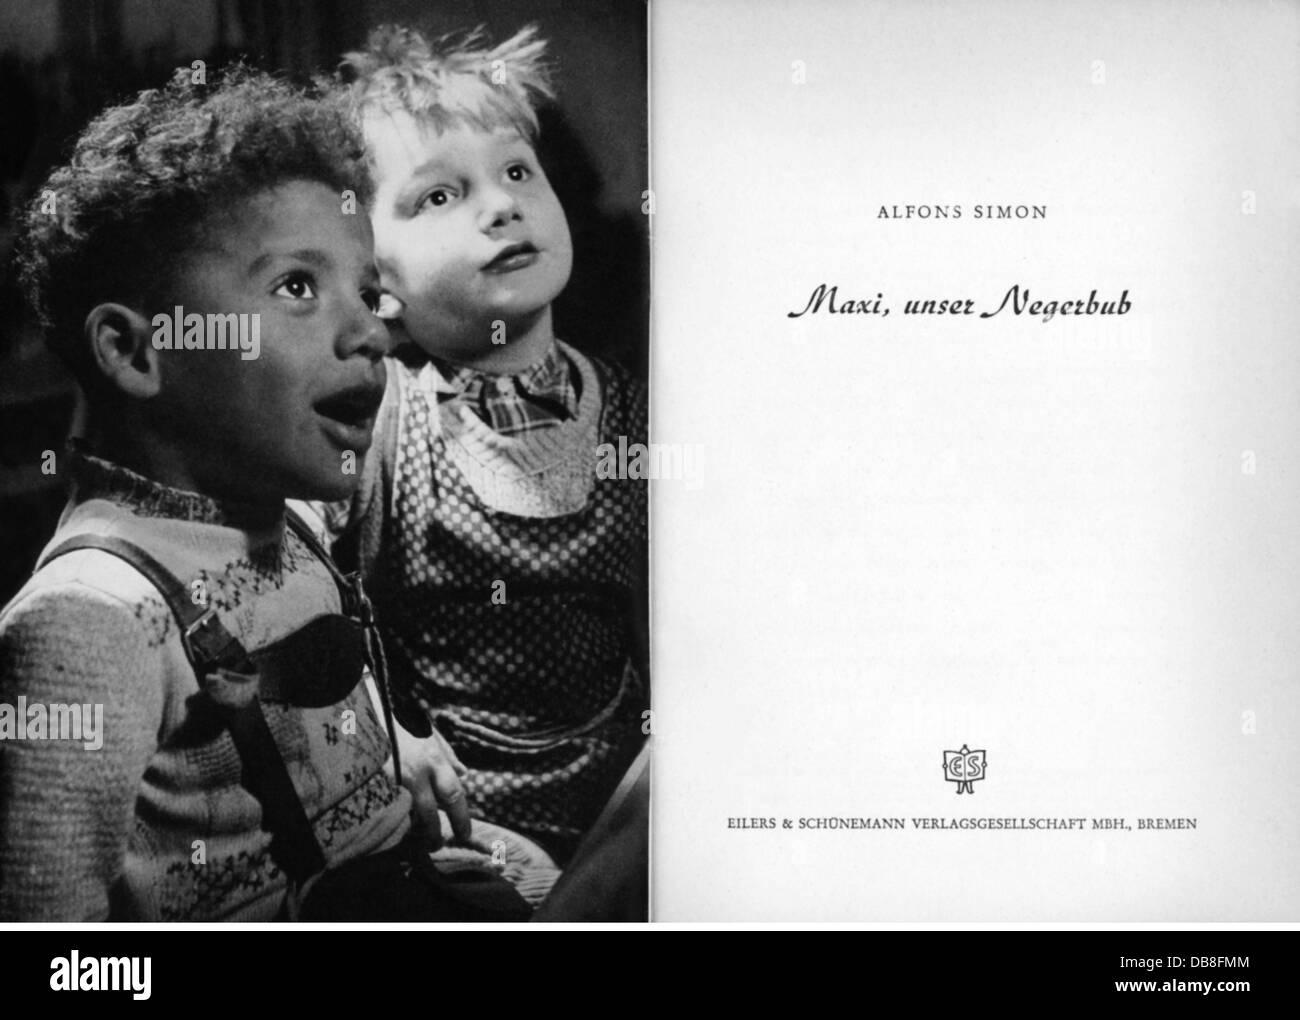 Simon, Alfons, 3.4.1897 - 23.6.1975, German pedagogue, works, 'Maxi, unser Negerbub' (Maxi, our negro boy), title, 6th - 23rd thousand, Bremen, 1952, Stock Photo